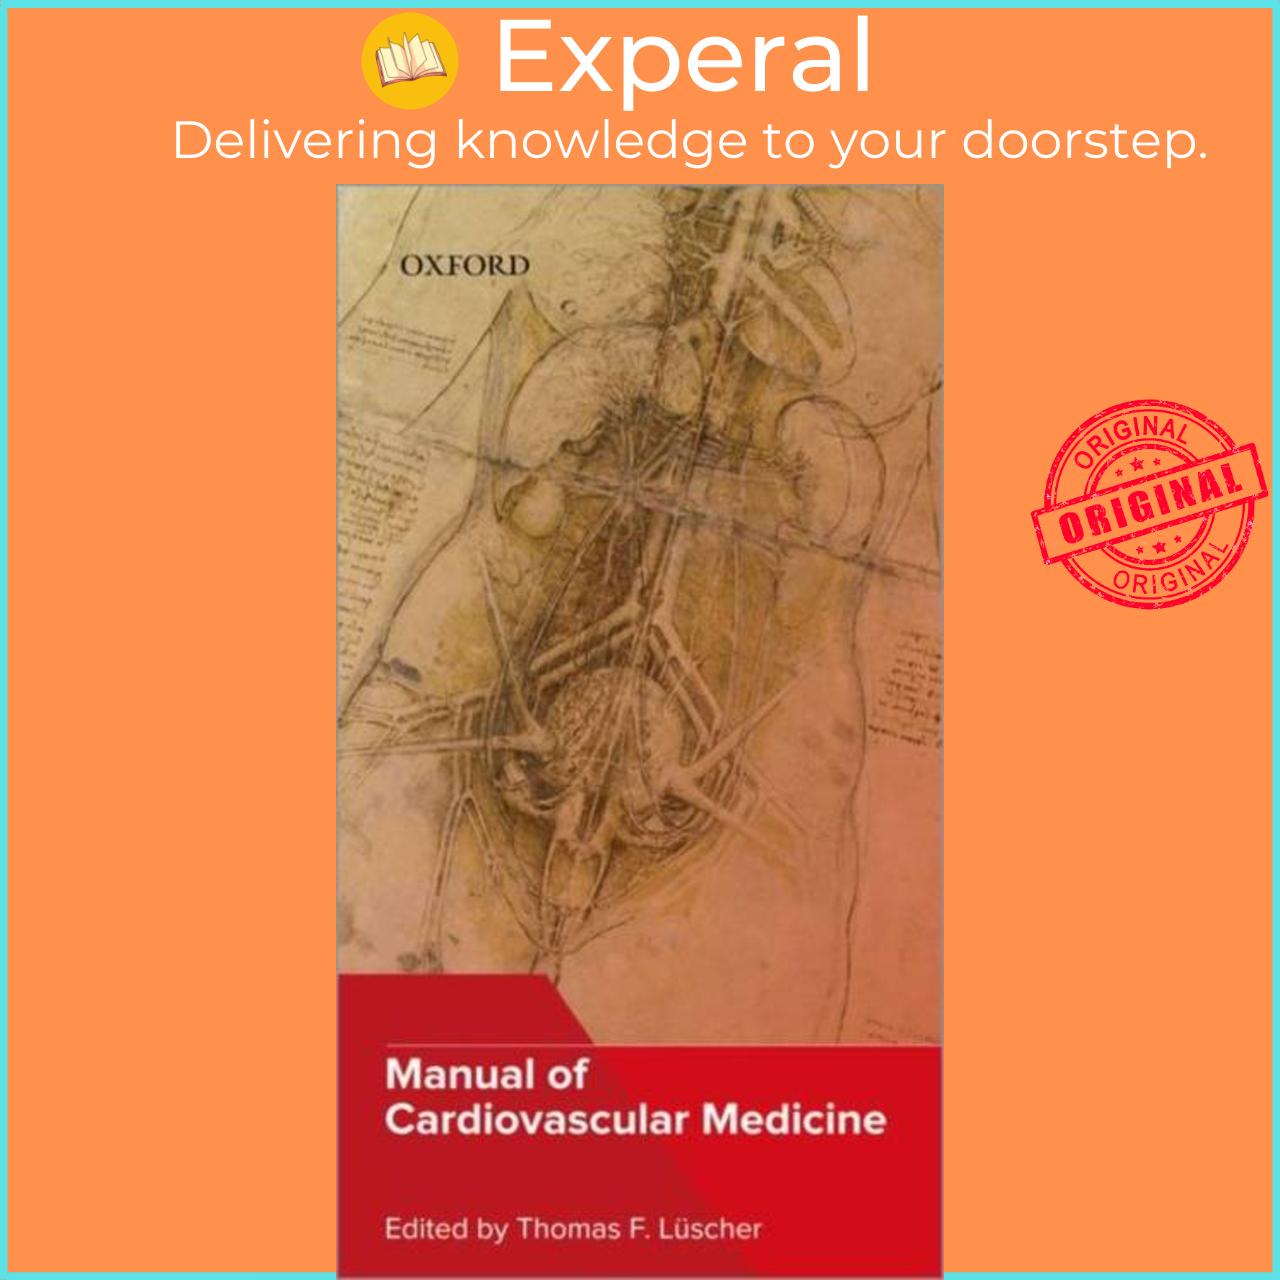 Hình ảnh Sách - Manual of Cardiovascular Medicine by Thomas Luscher (UK edition, paperback)